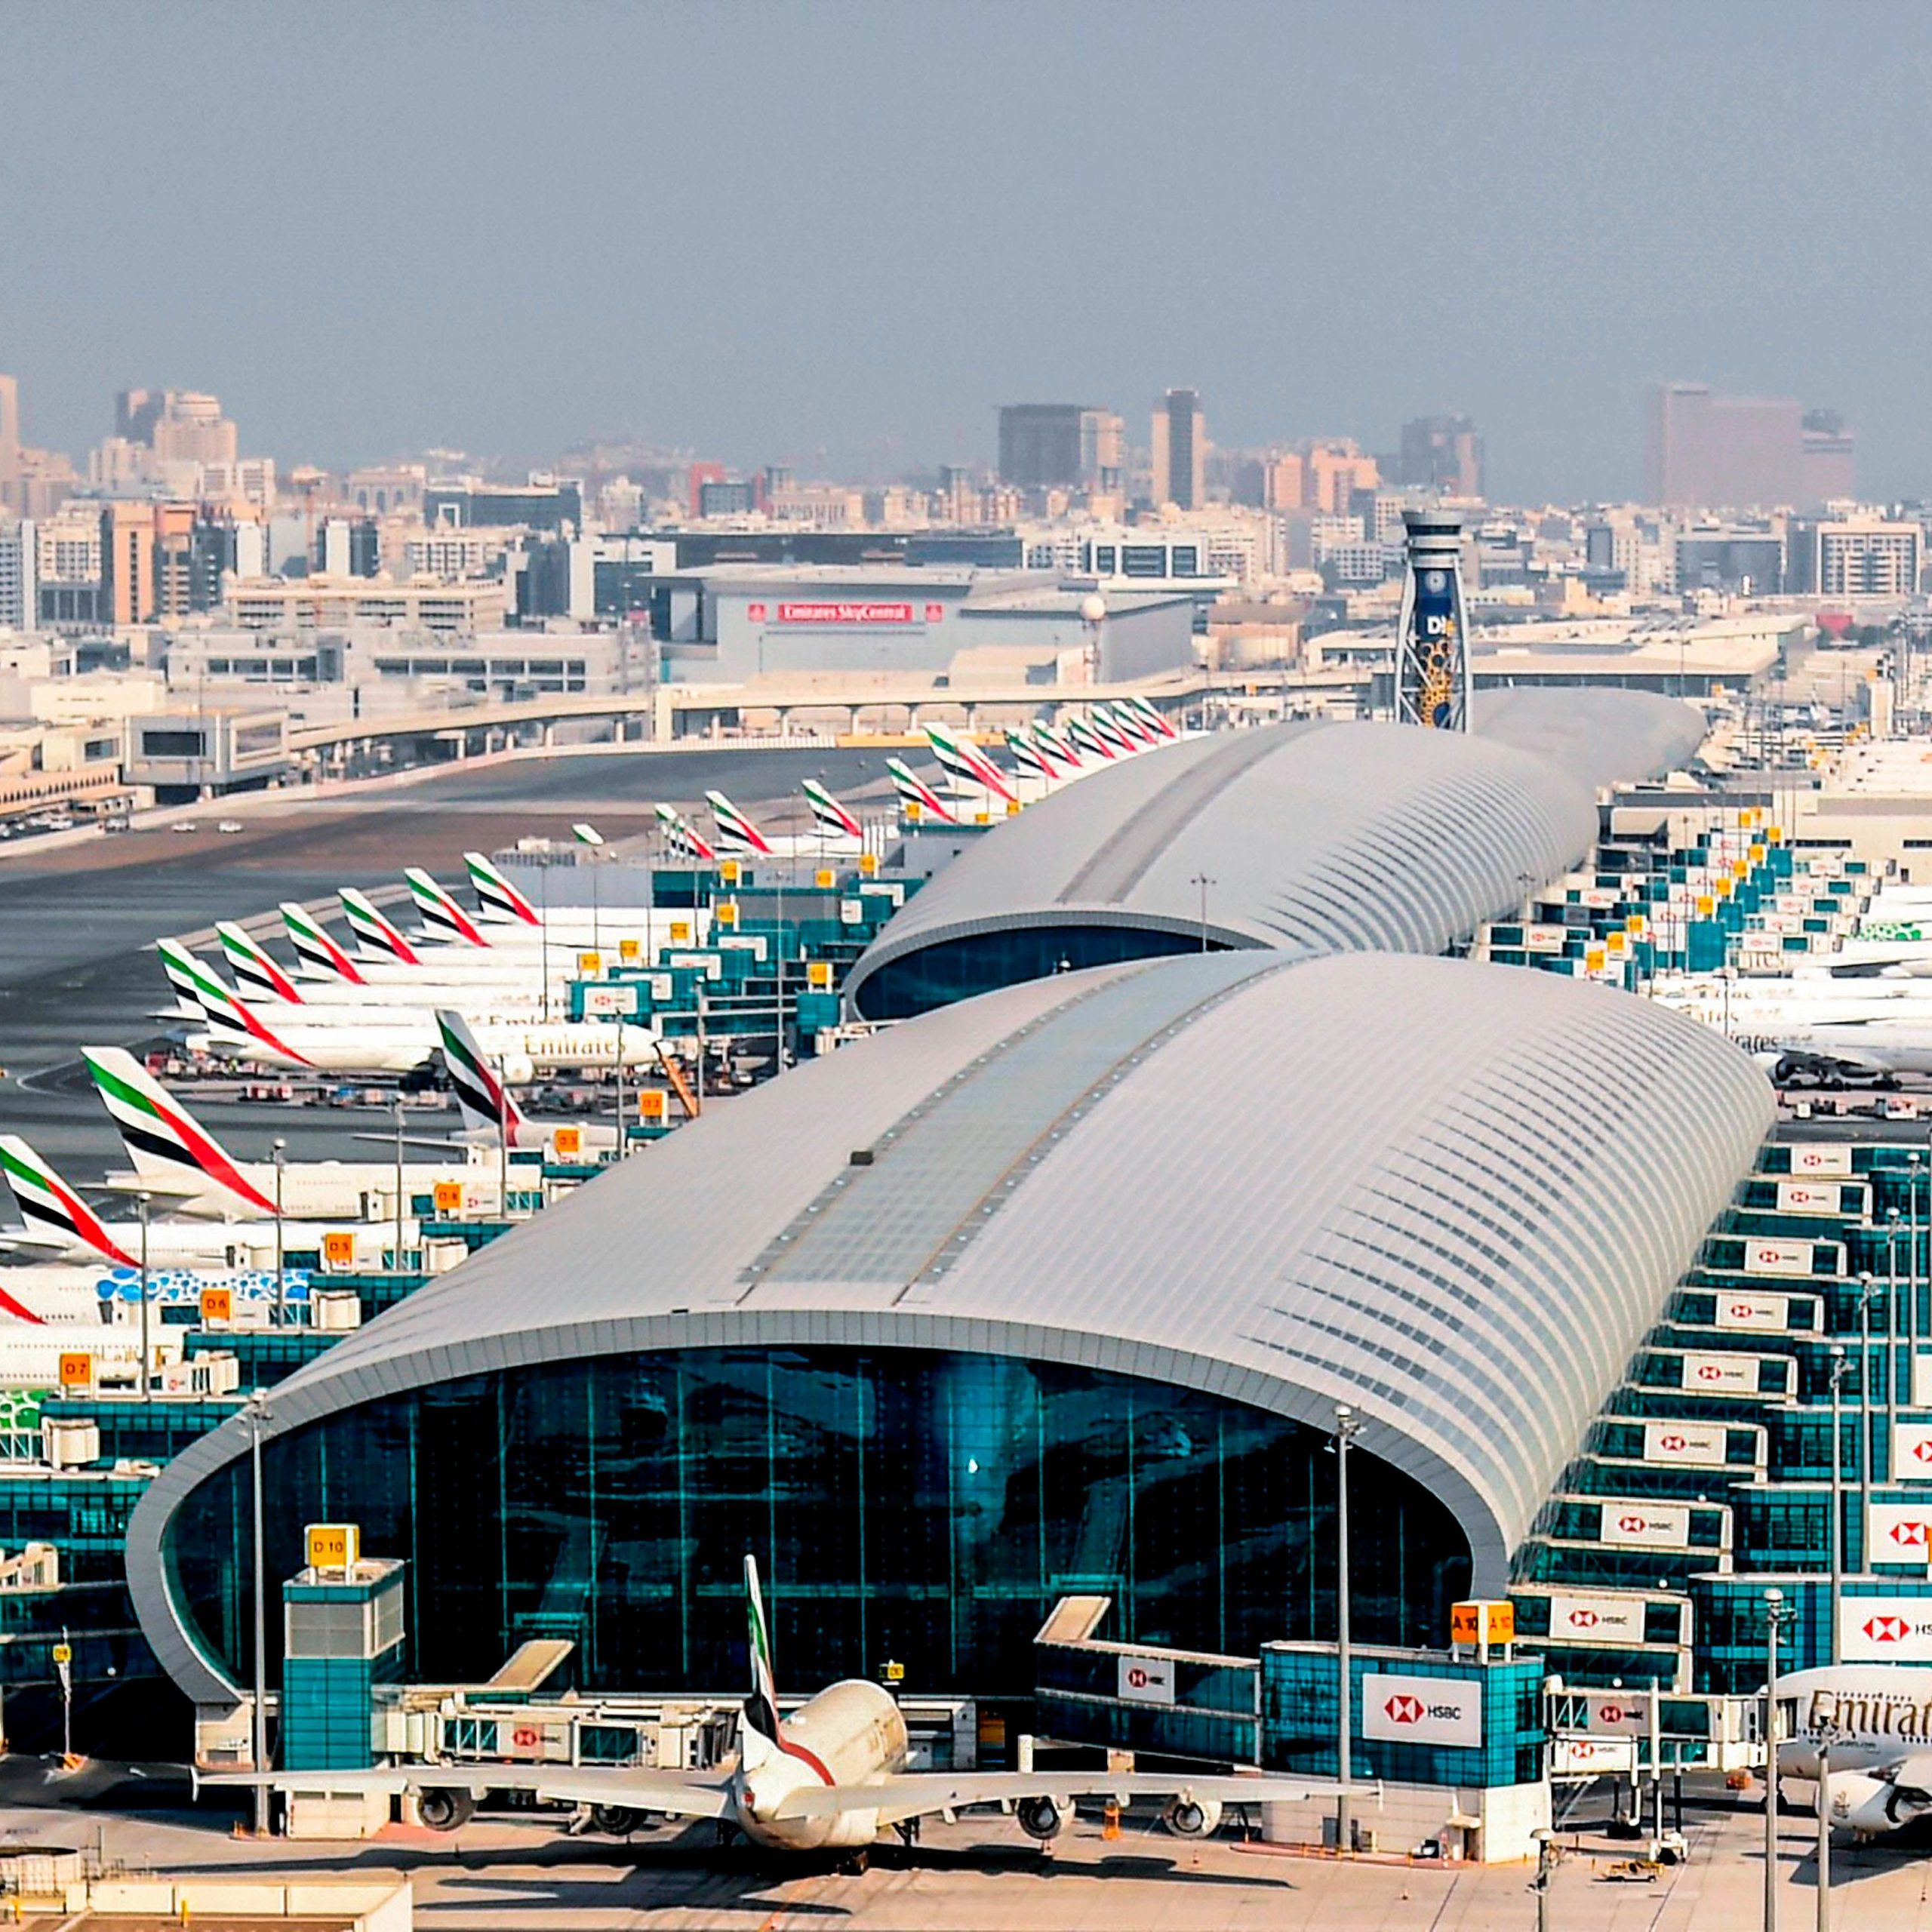 Day-1- Arrival at Dubai International Airport